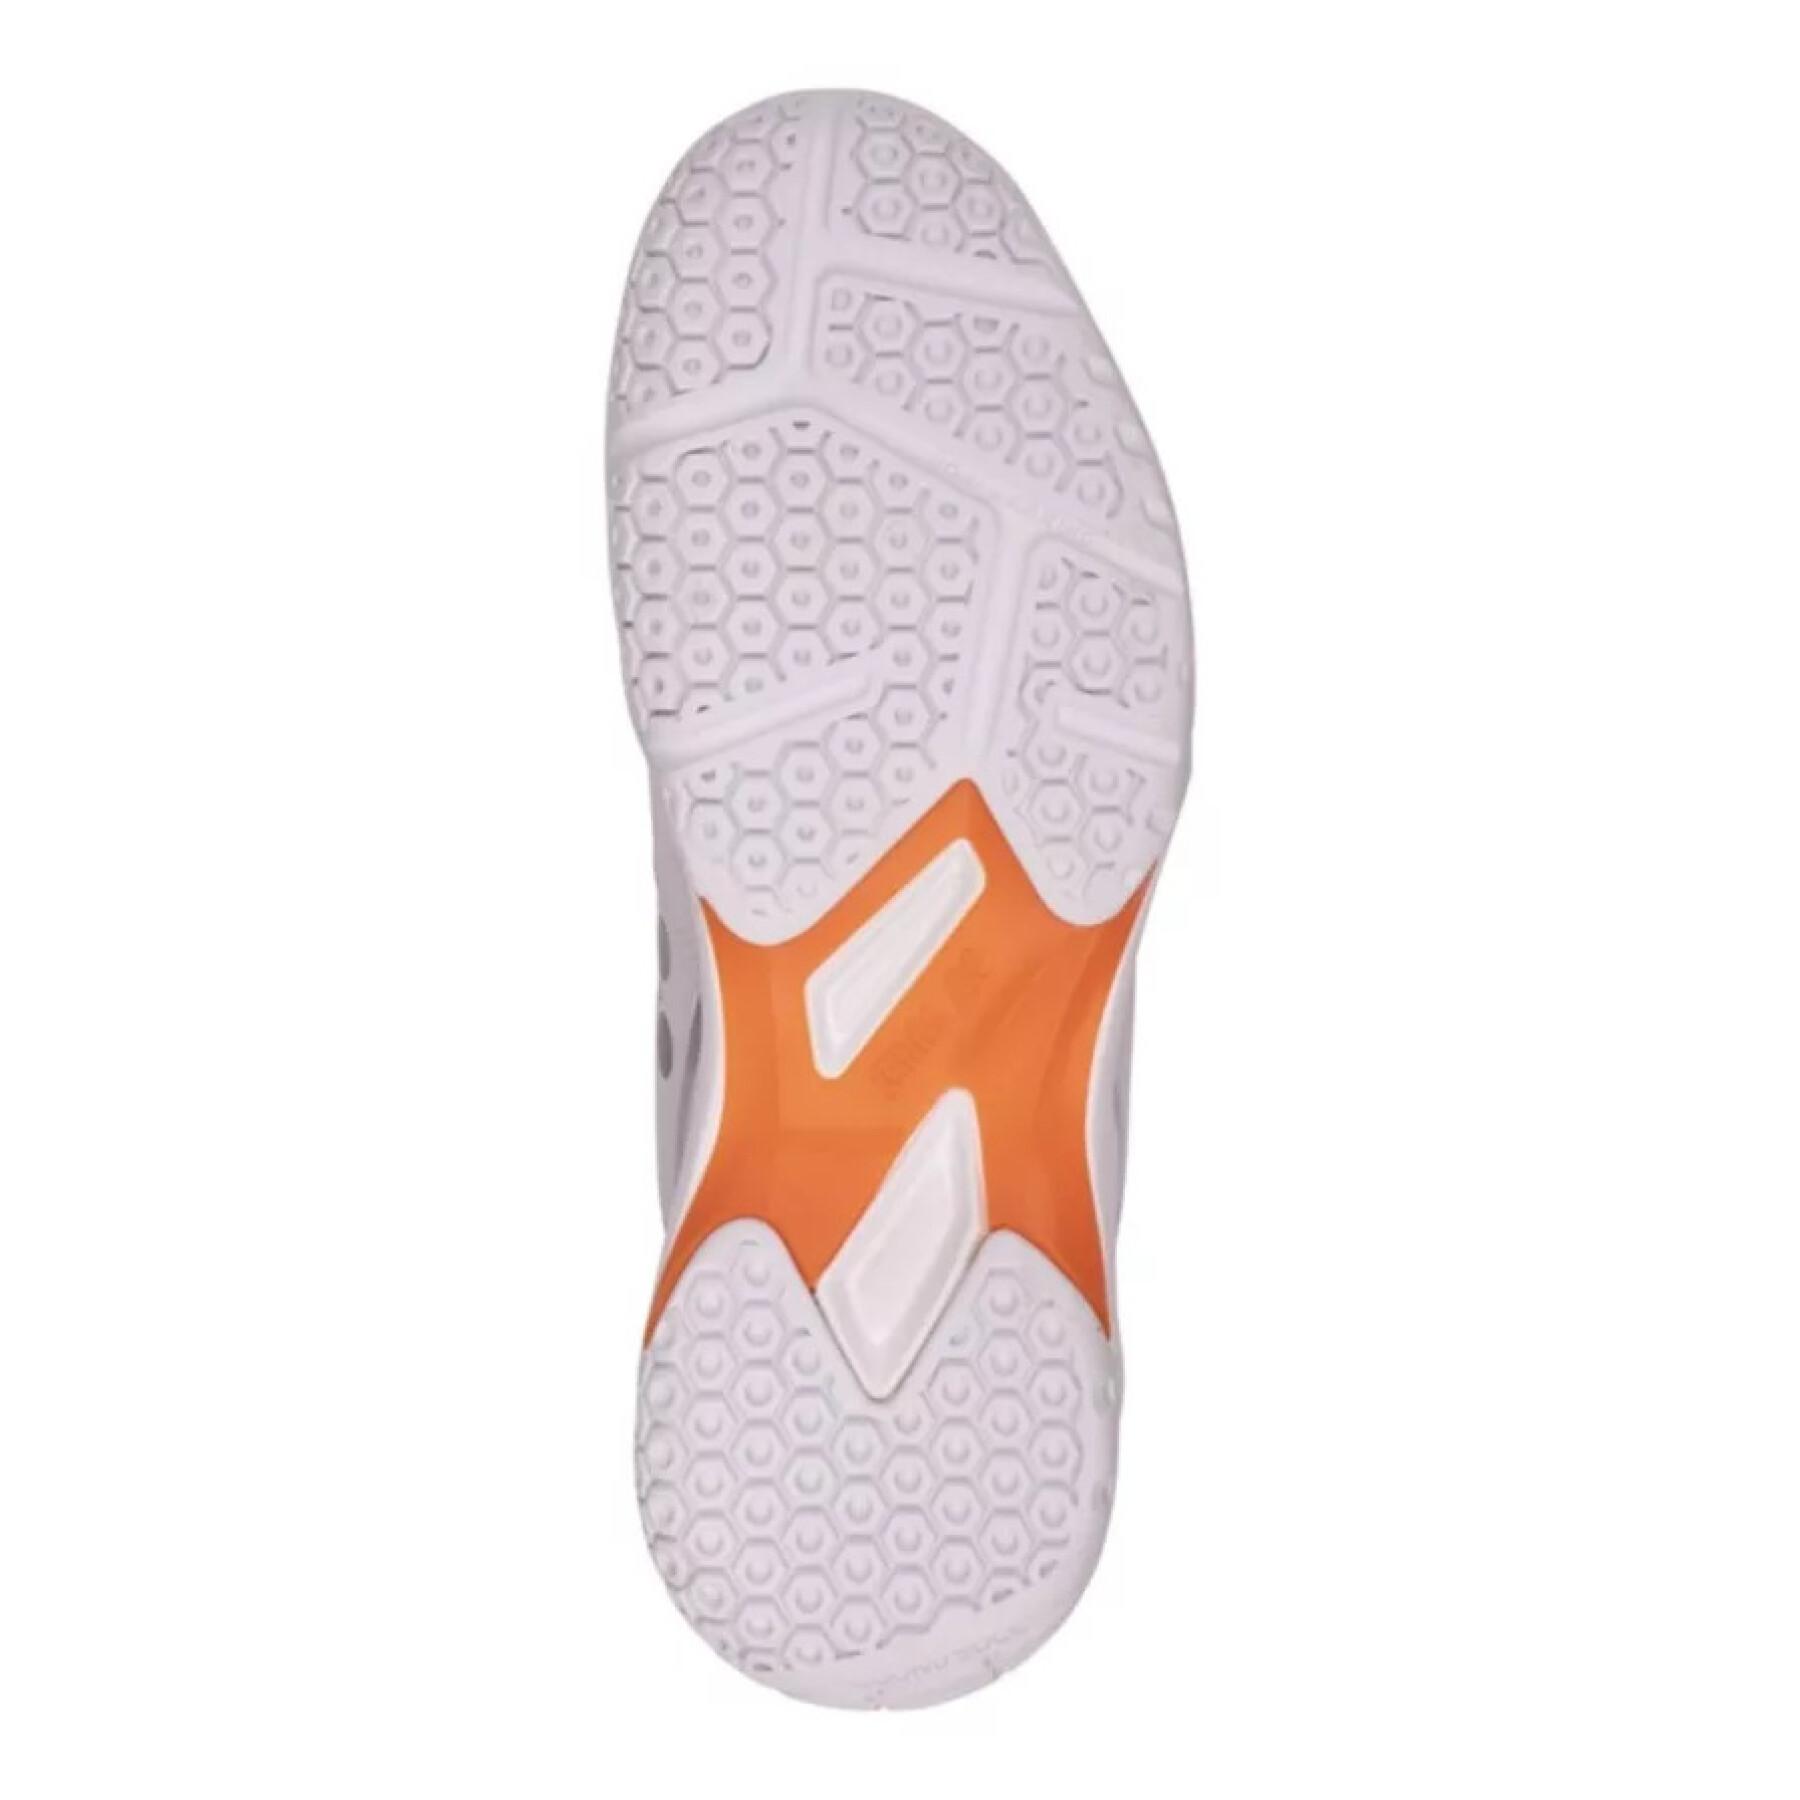 Chaussures de badminton Yonex Power Cushion 65 X